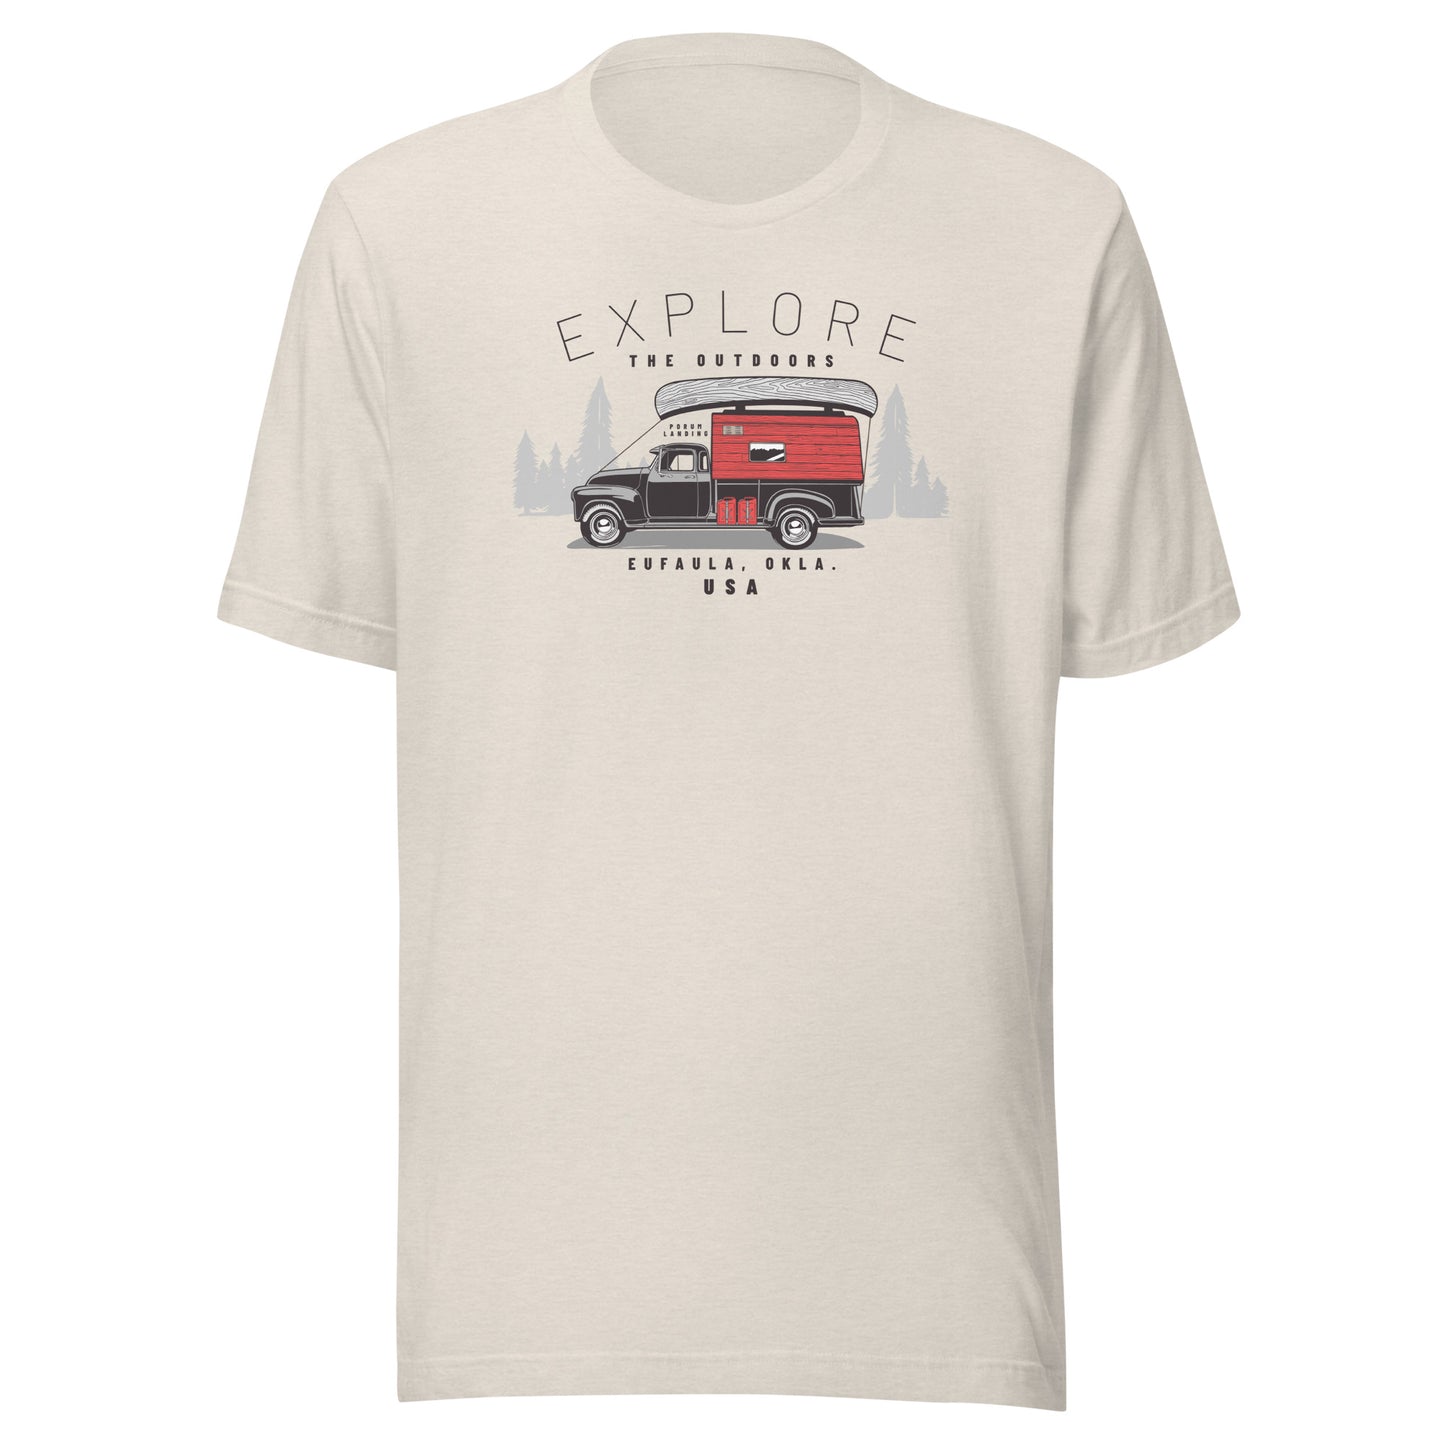 Explore Outdoors - Eufaula Okla T-shirt